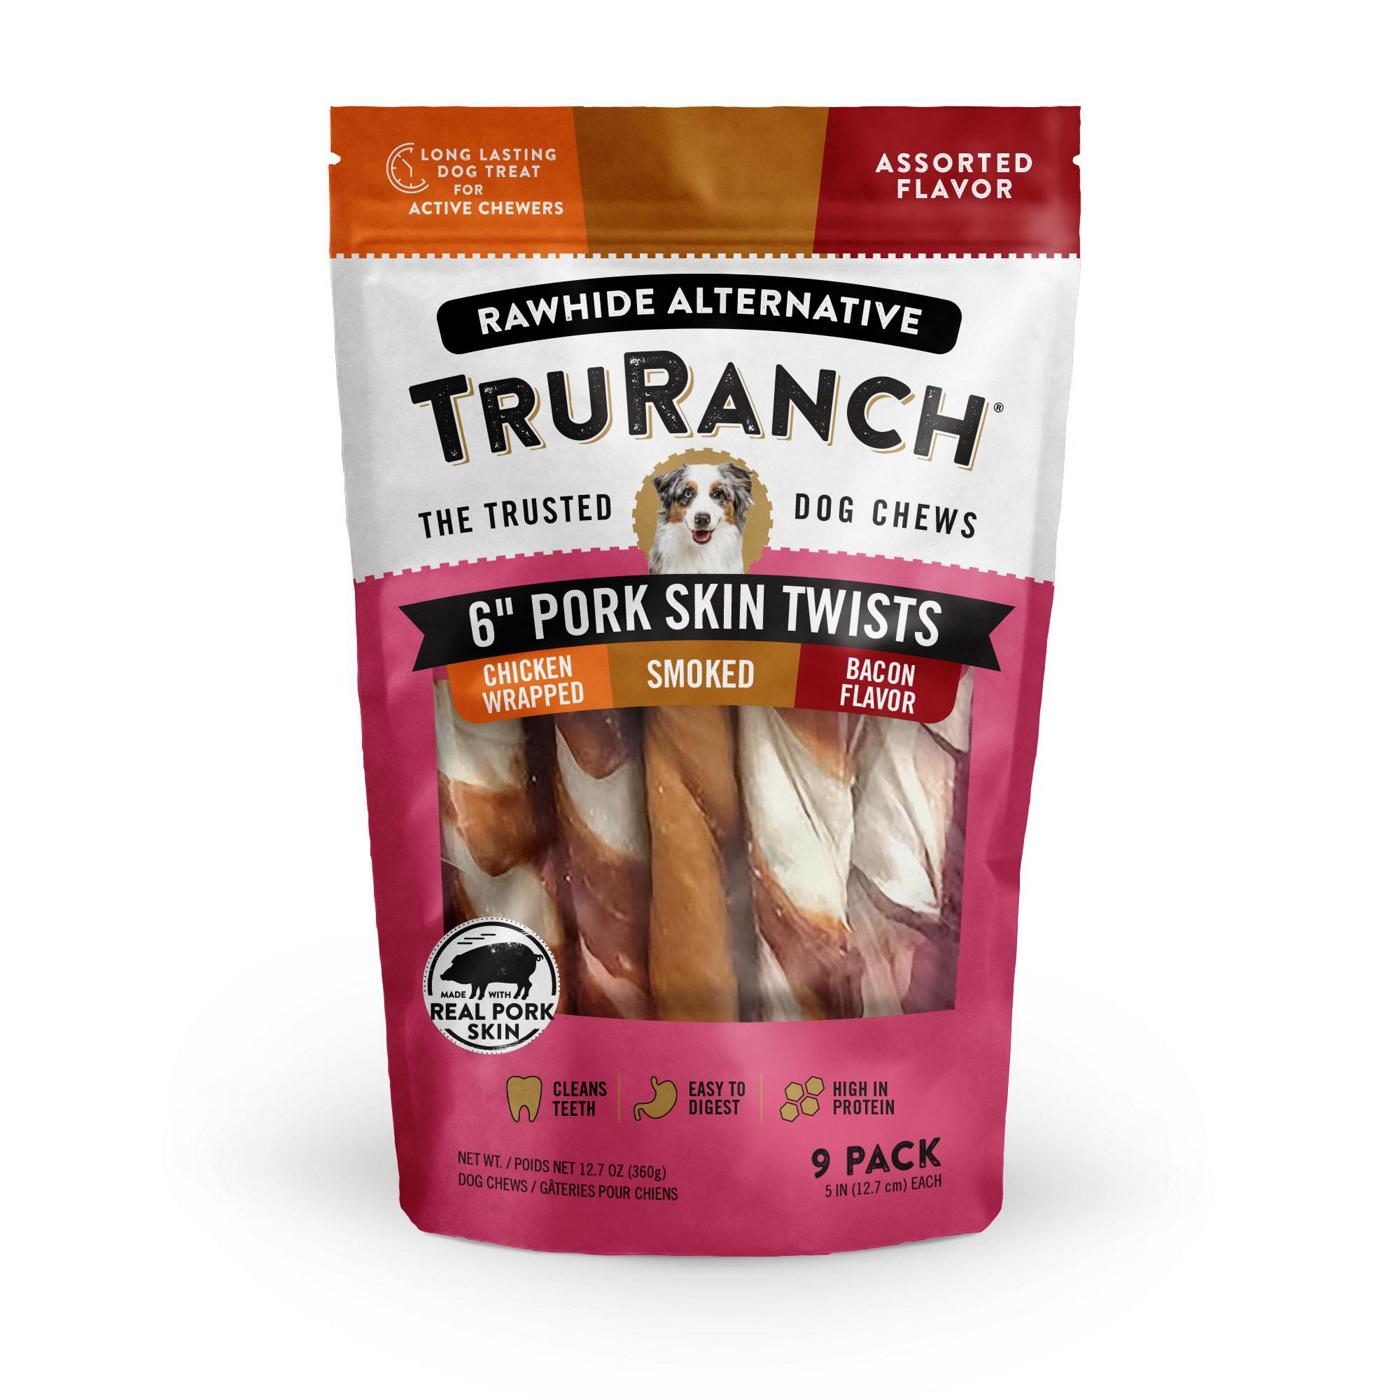 TruRanch 6 Inch Pork Skin Twists Assorted Dog Chews; image 1 of 2